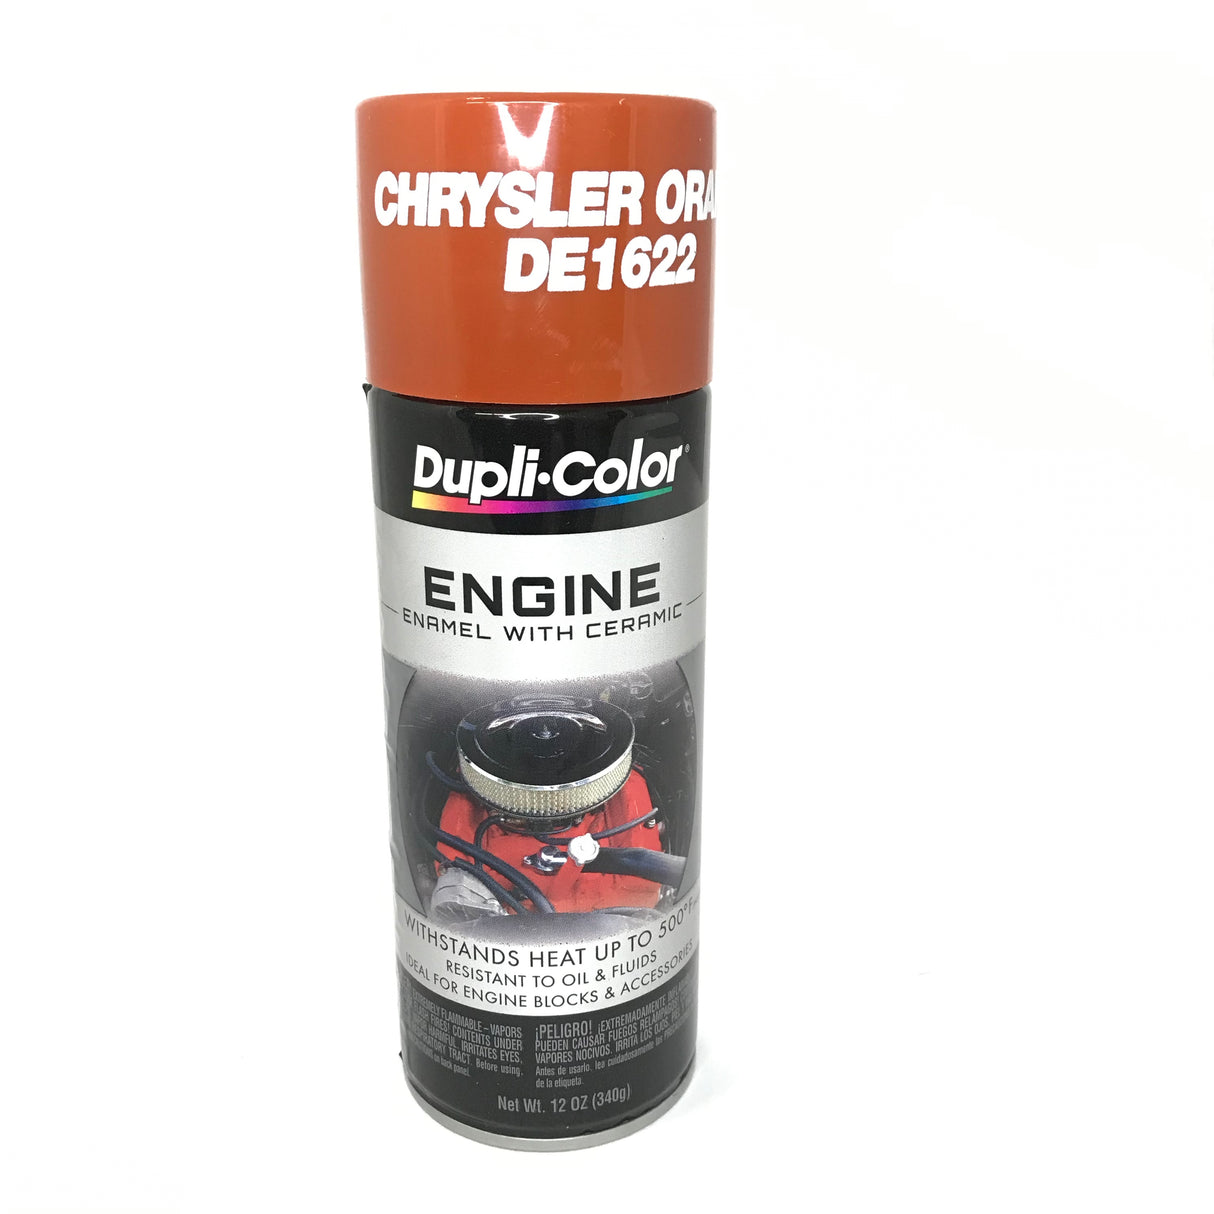 Duplicolor DE1622 CHRYSLER ORANGE Engine Enamel Paint with Ceramic - 12 oz Aerosol